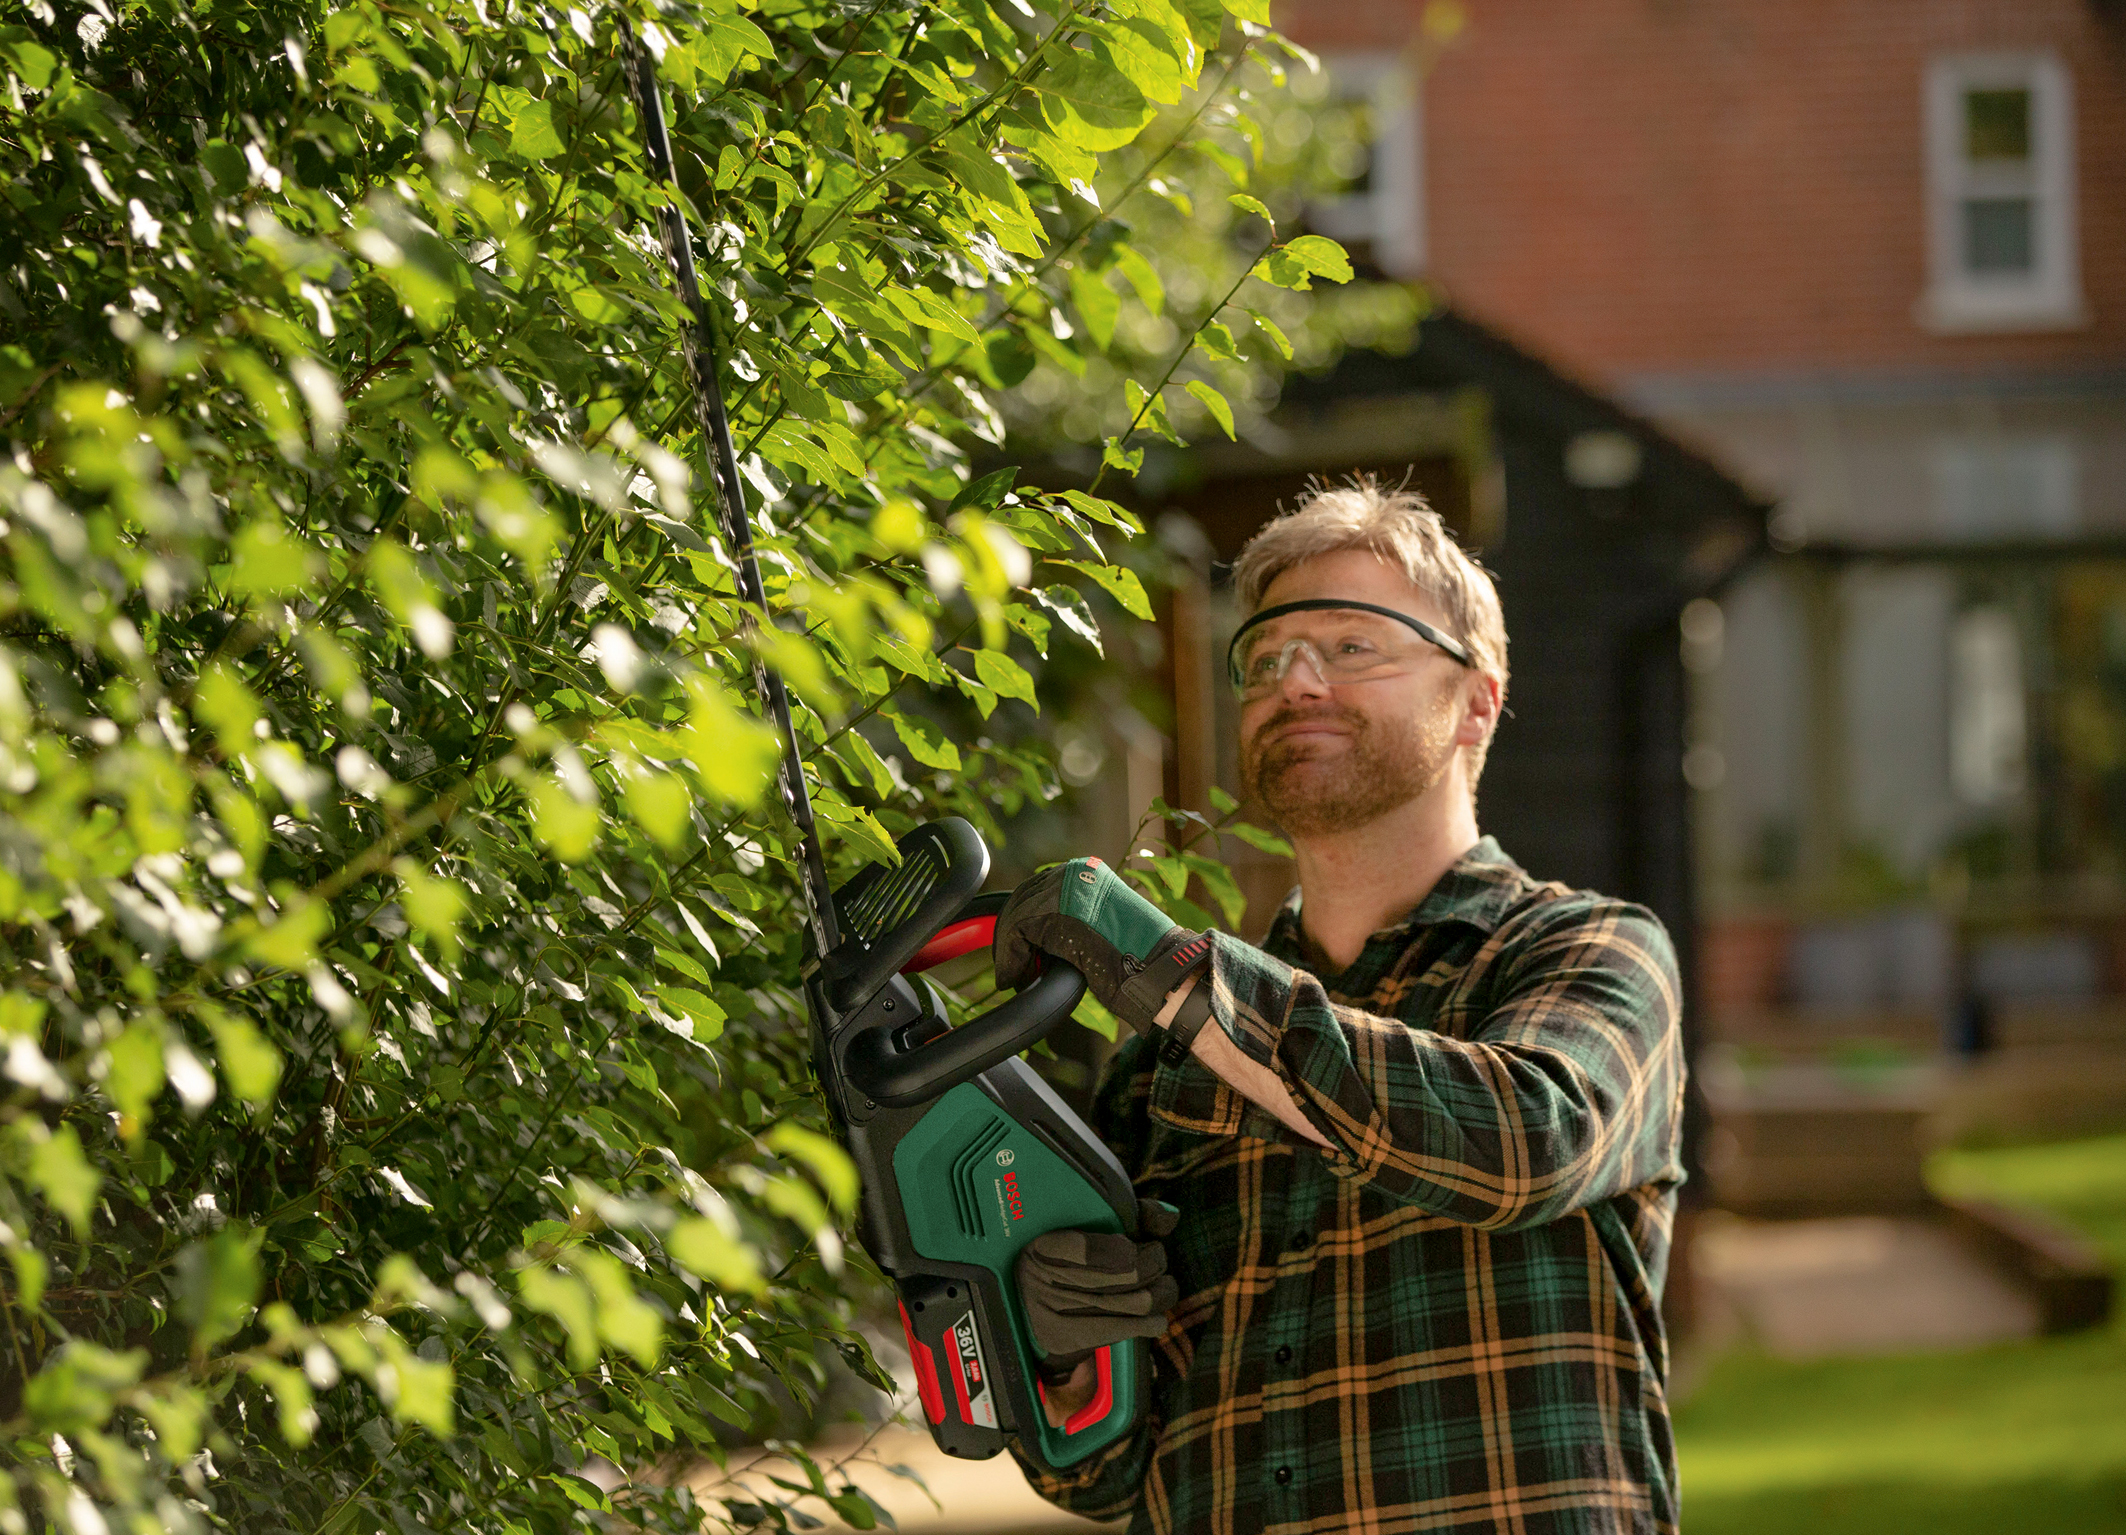 Start the gardening season with full power: AdvancedHedgeCut 36V-65-28 cordless hedgecutter from Bosch